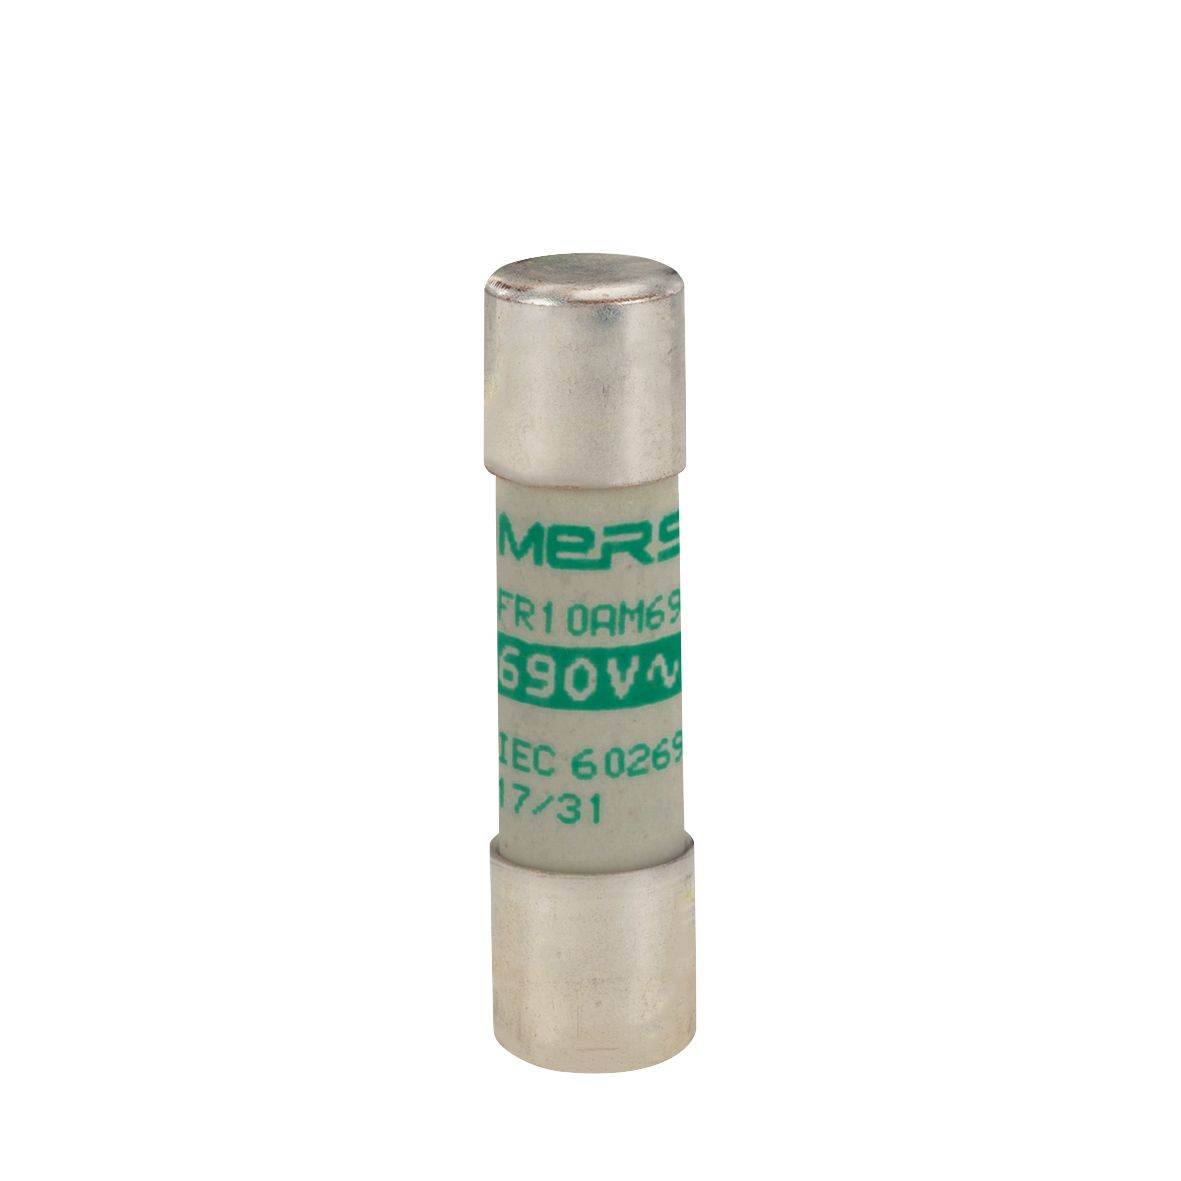 L302782 - Cylindrical fuse-link aM 690VAC 10.3x38, 6A